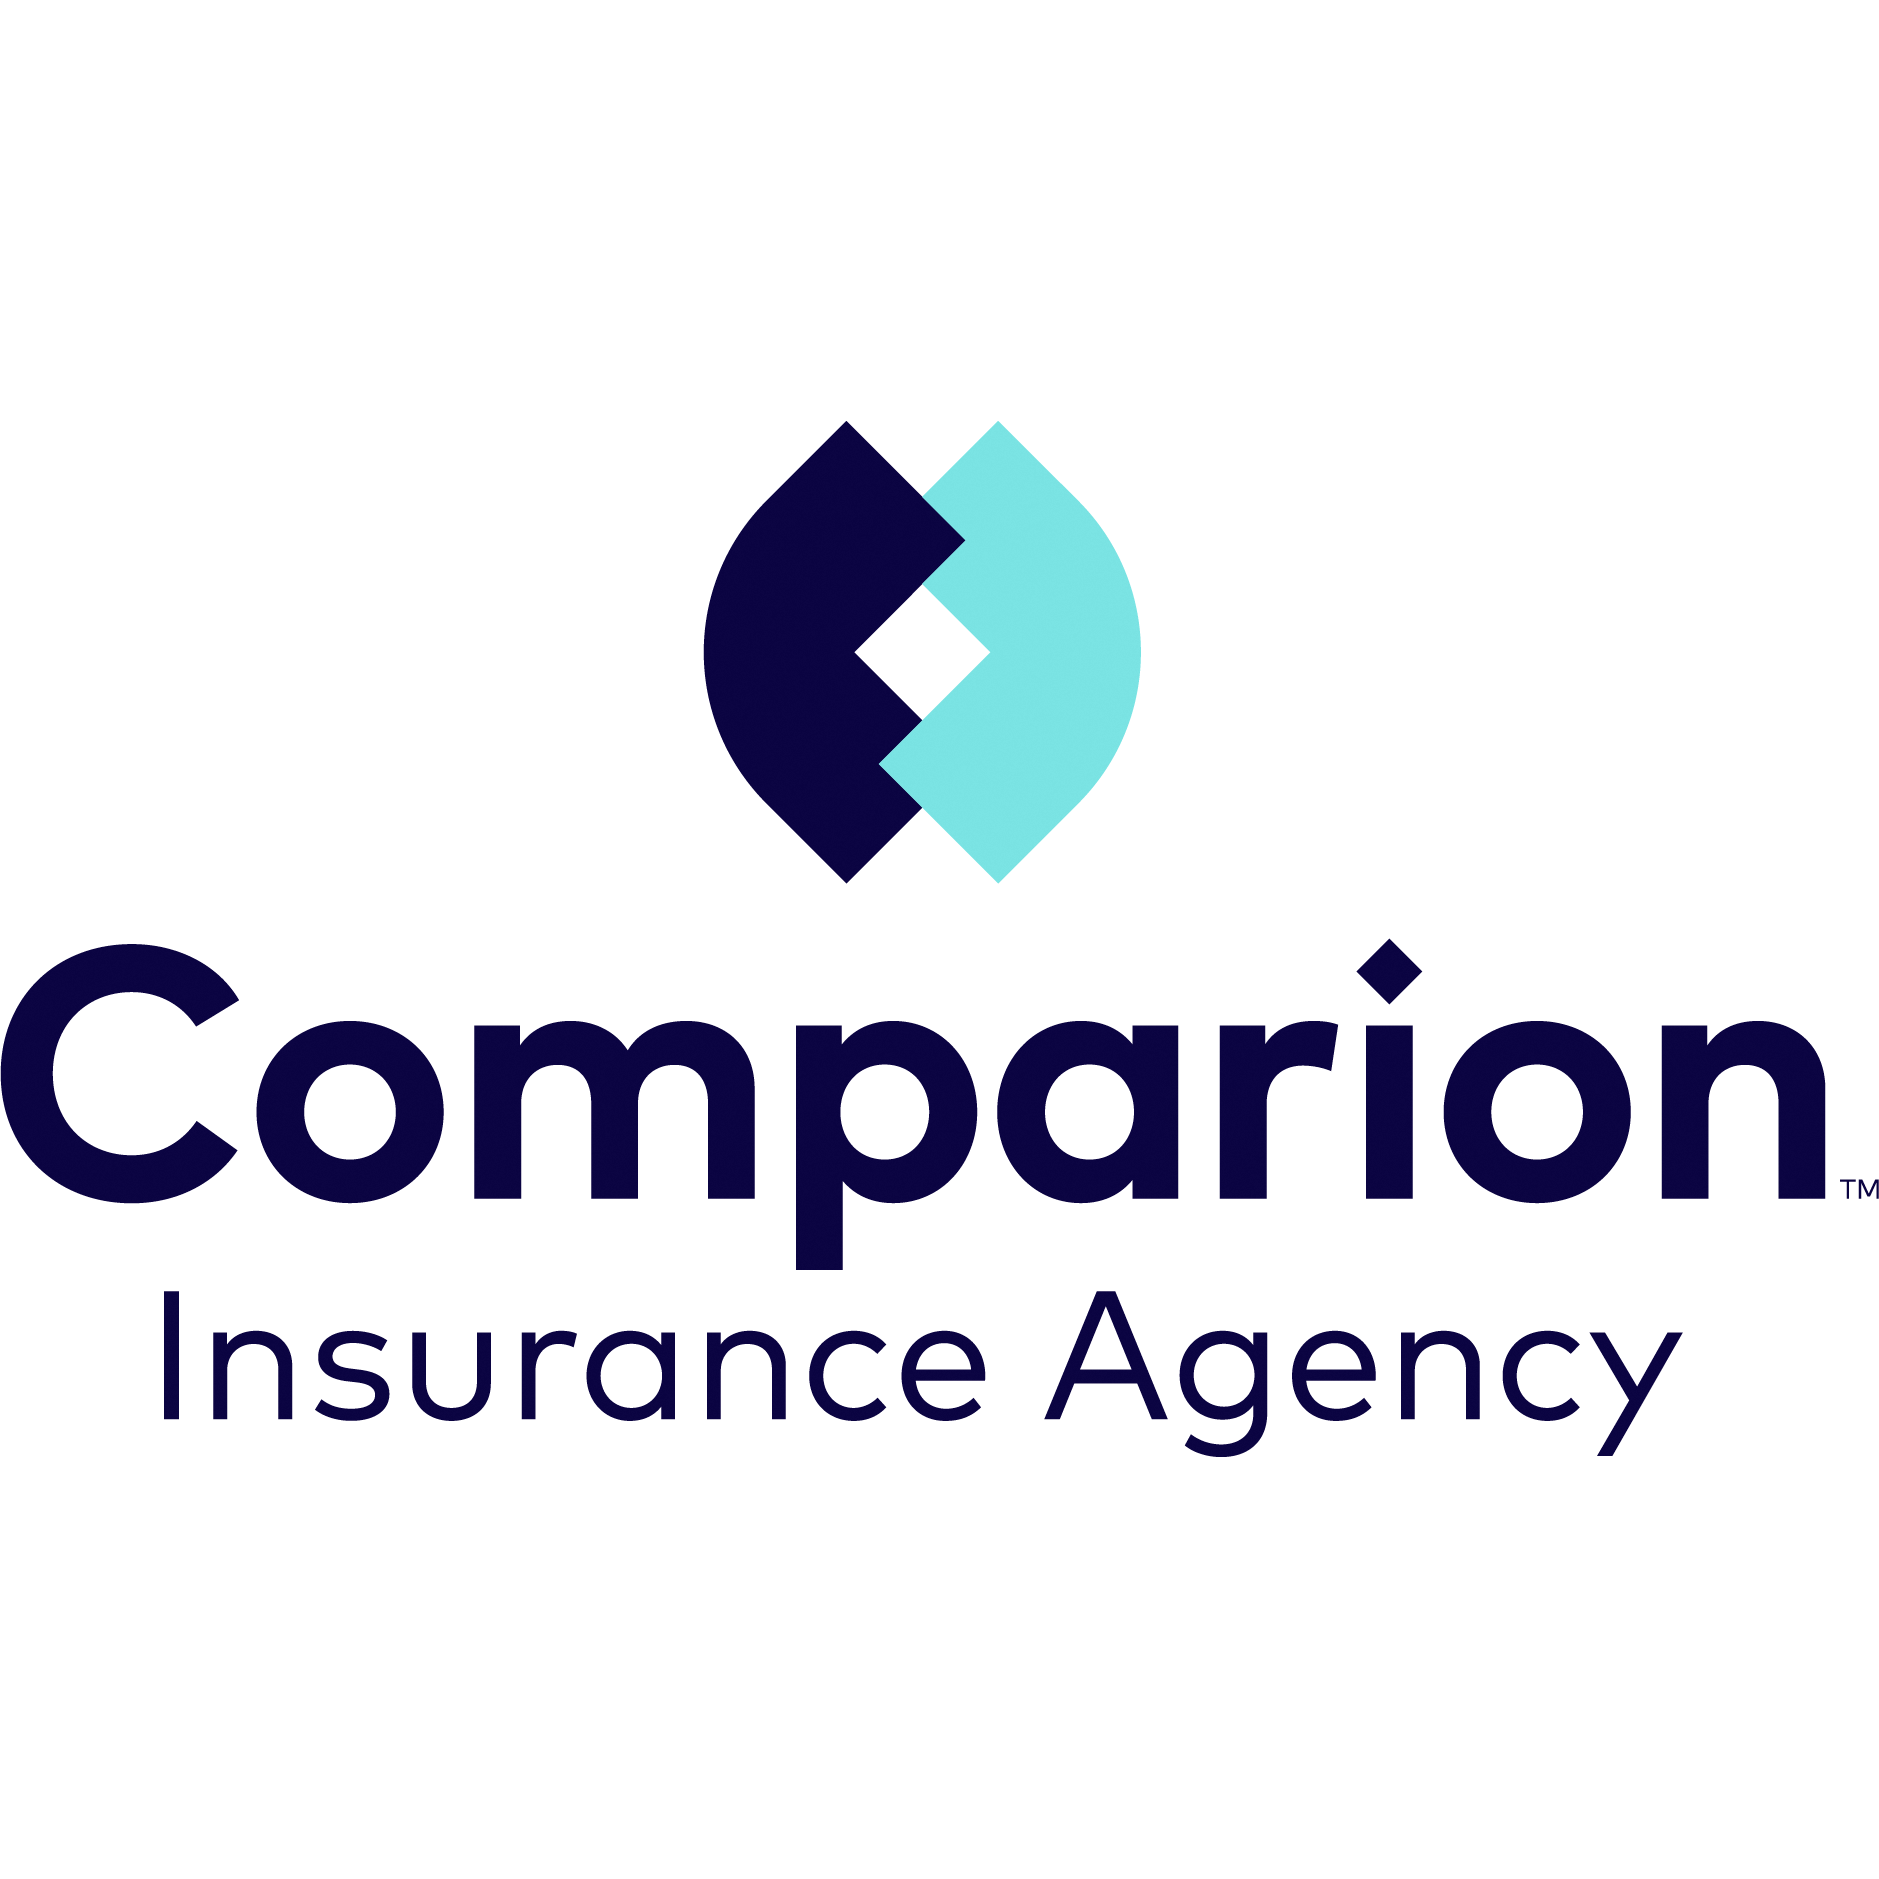 Daniel Moya at Comparion Insurance Agency